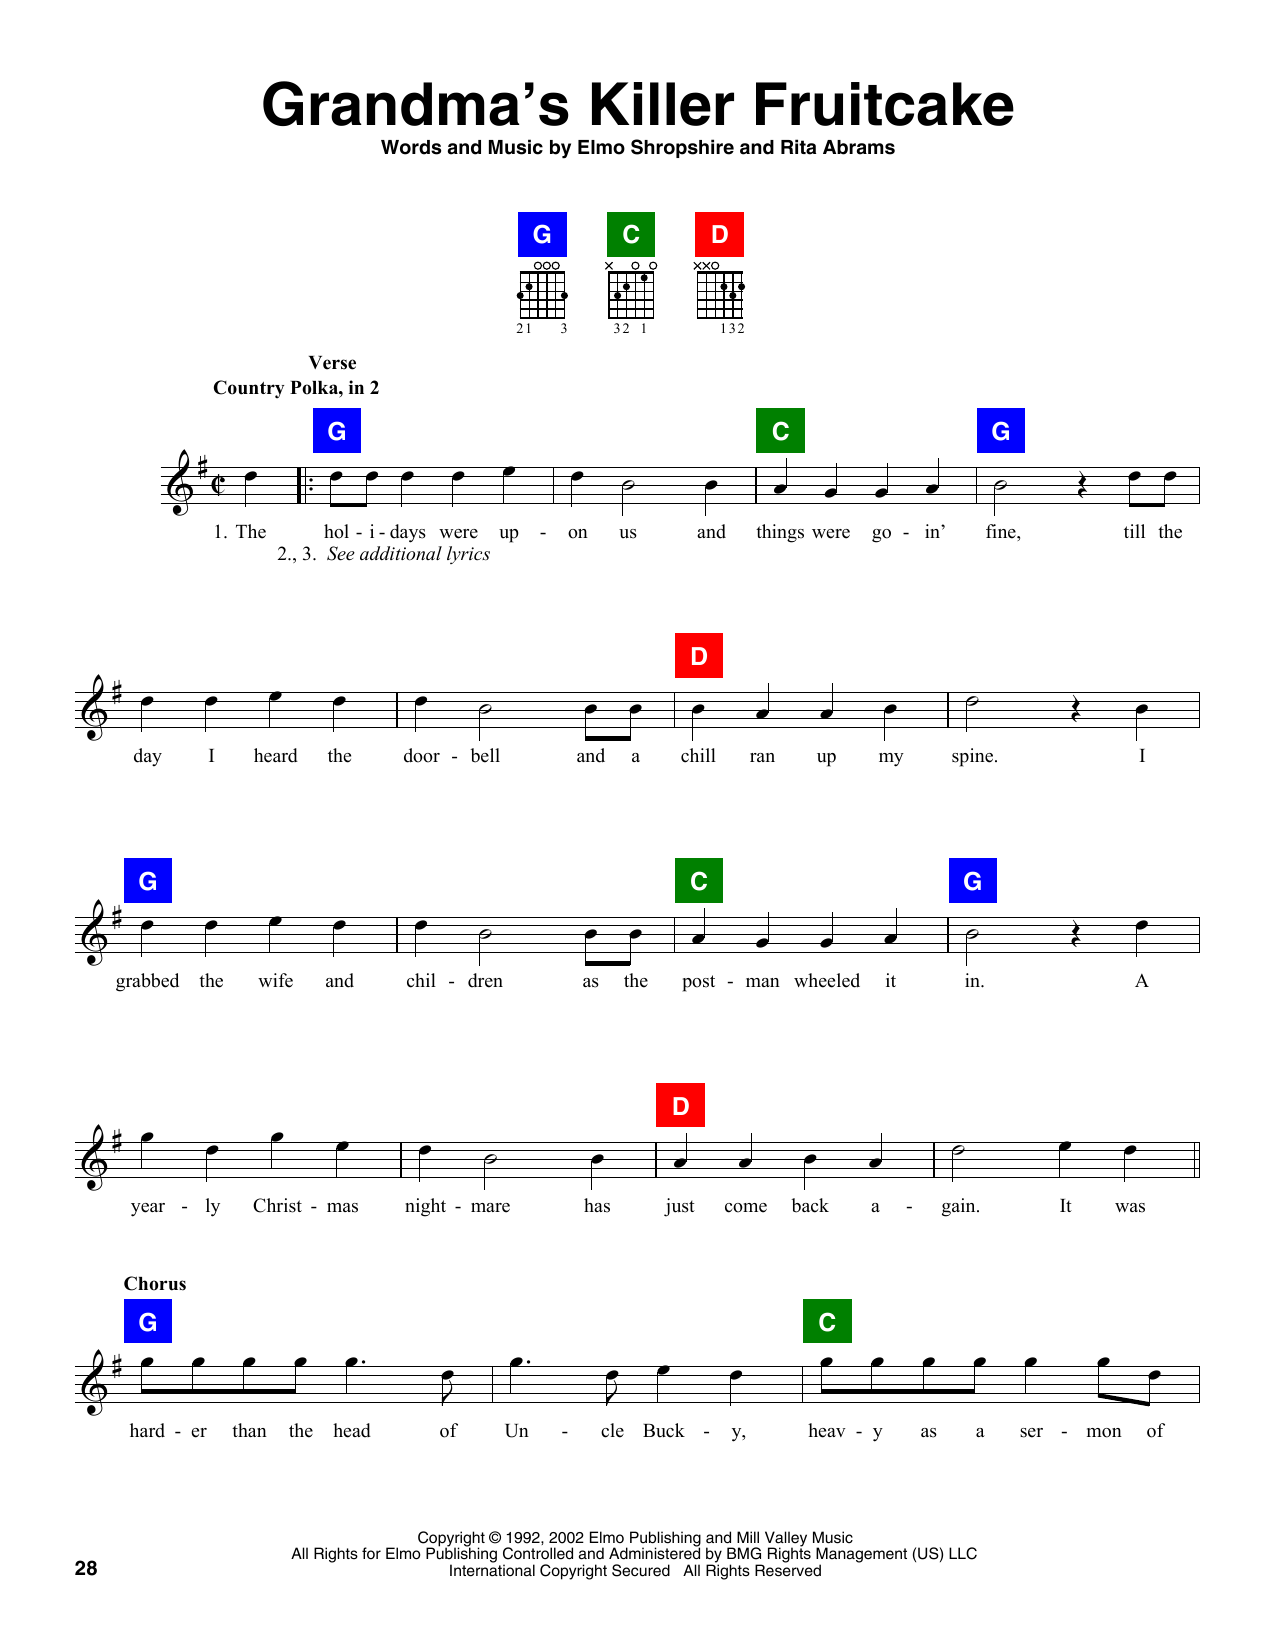 Elmo Shropshire Grandma's Killer Fruitcake Sheet Music Notes & Chords for Viola - Download or Print PDF